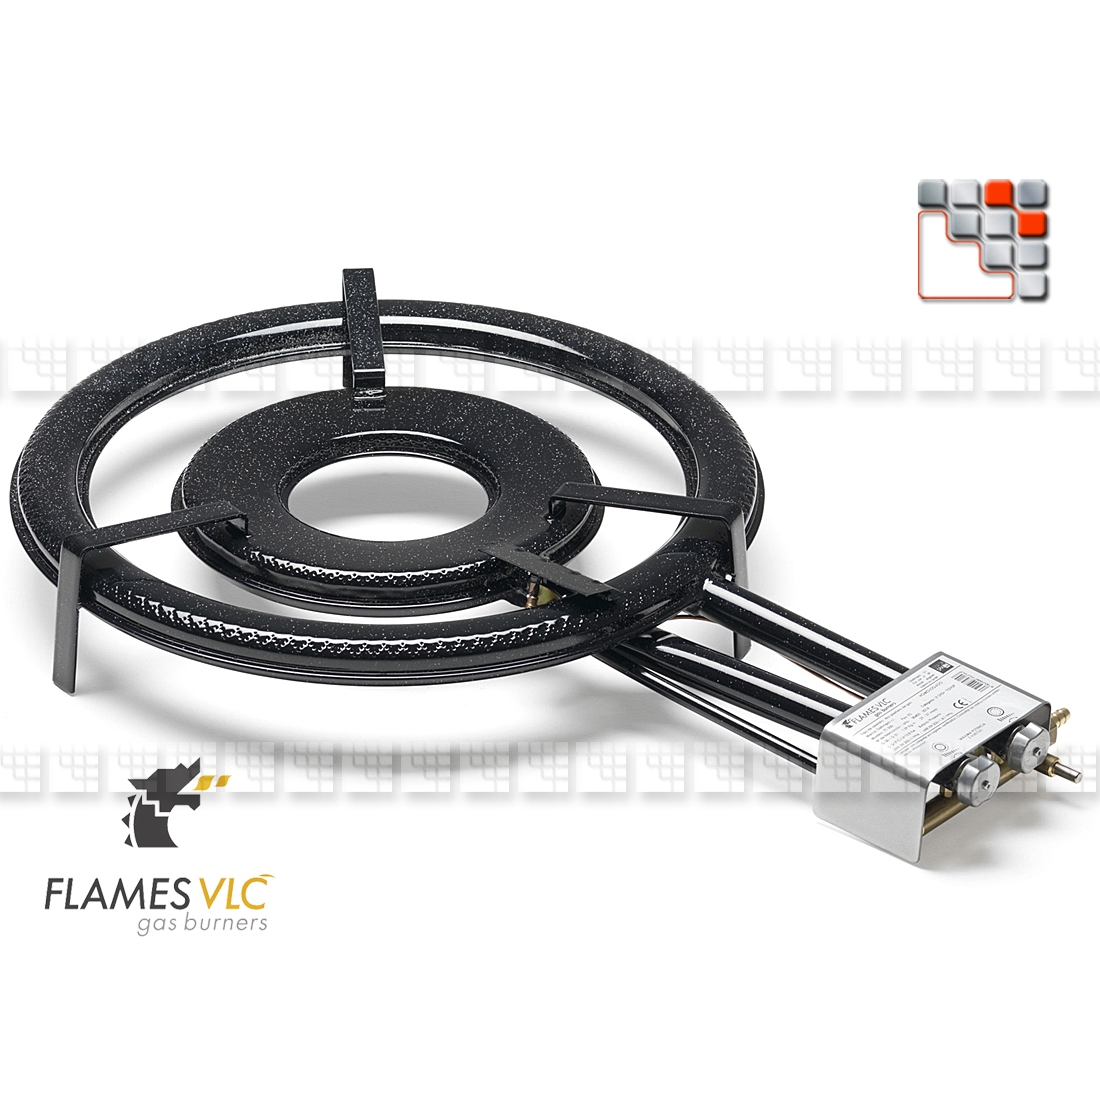 Bruleur Gaz TT-500BFR VLC F08-TT500 FLAMES VLC® Bruleur Gaz Flames VLC